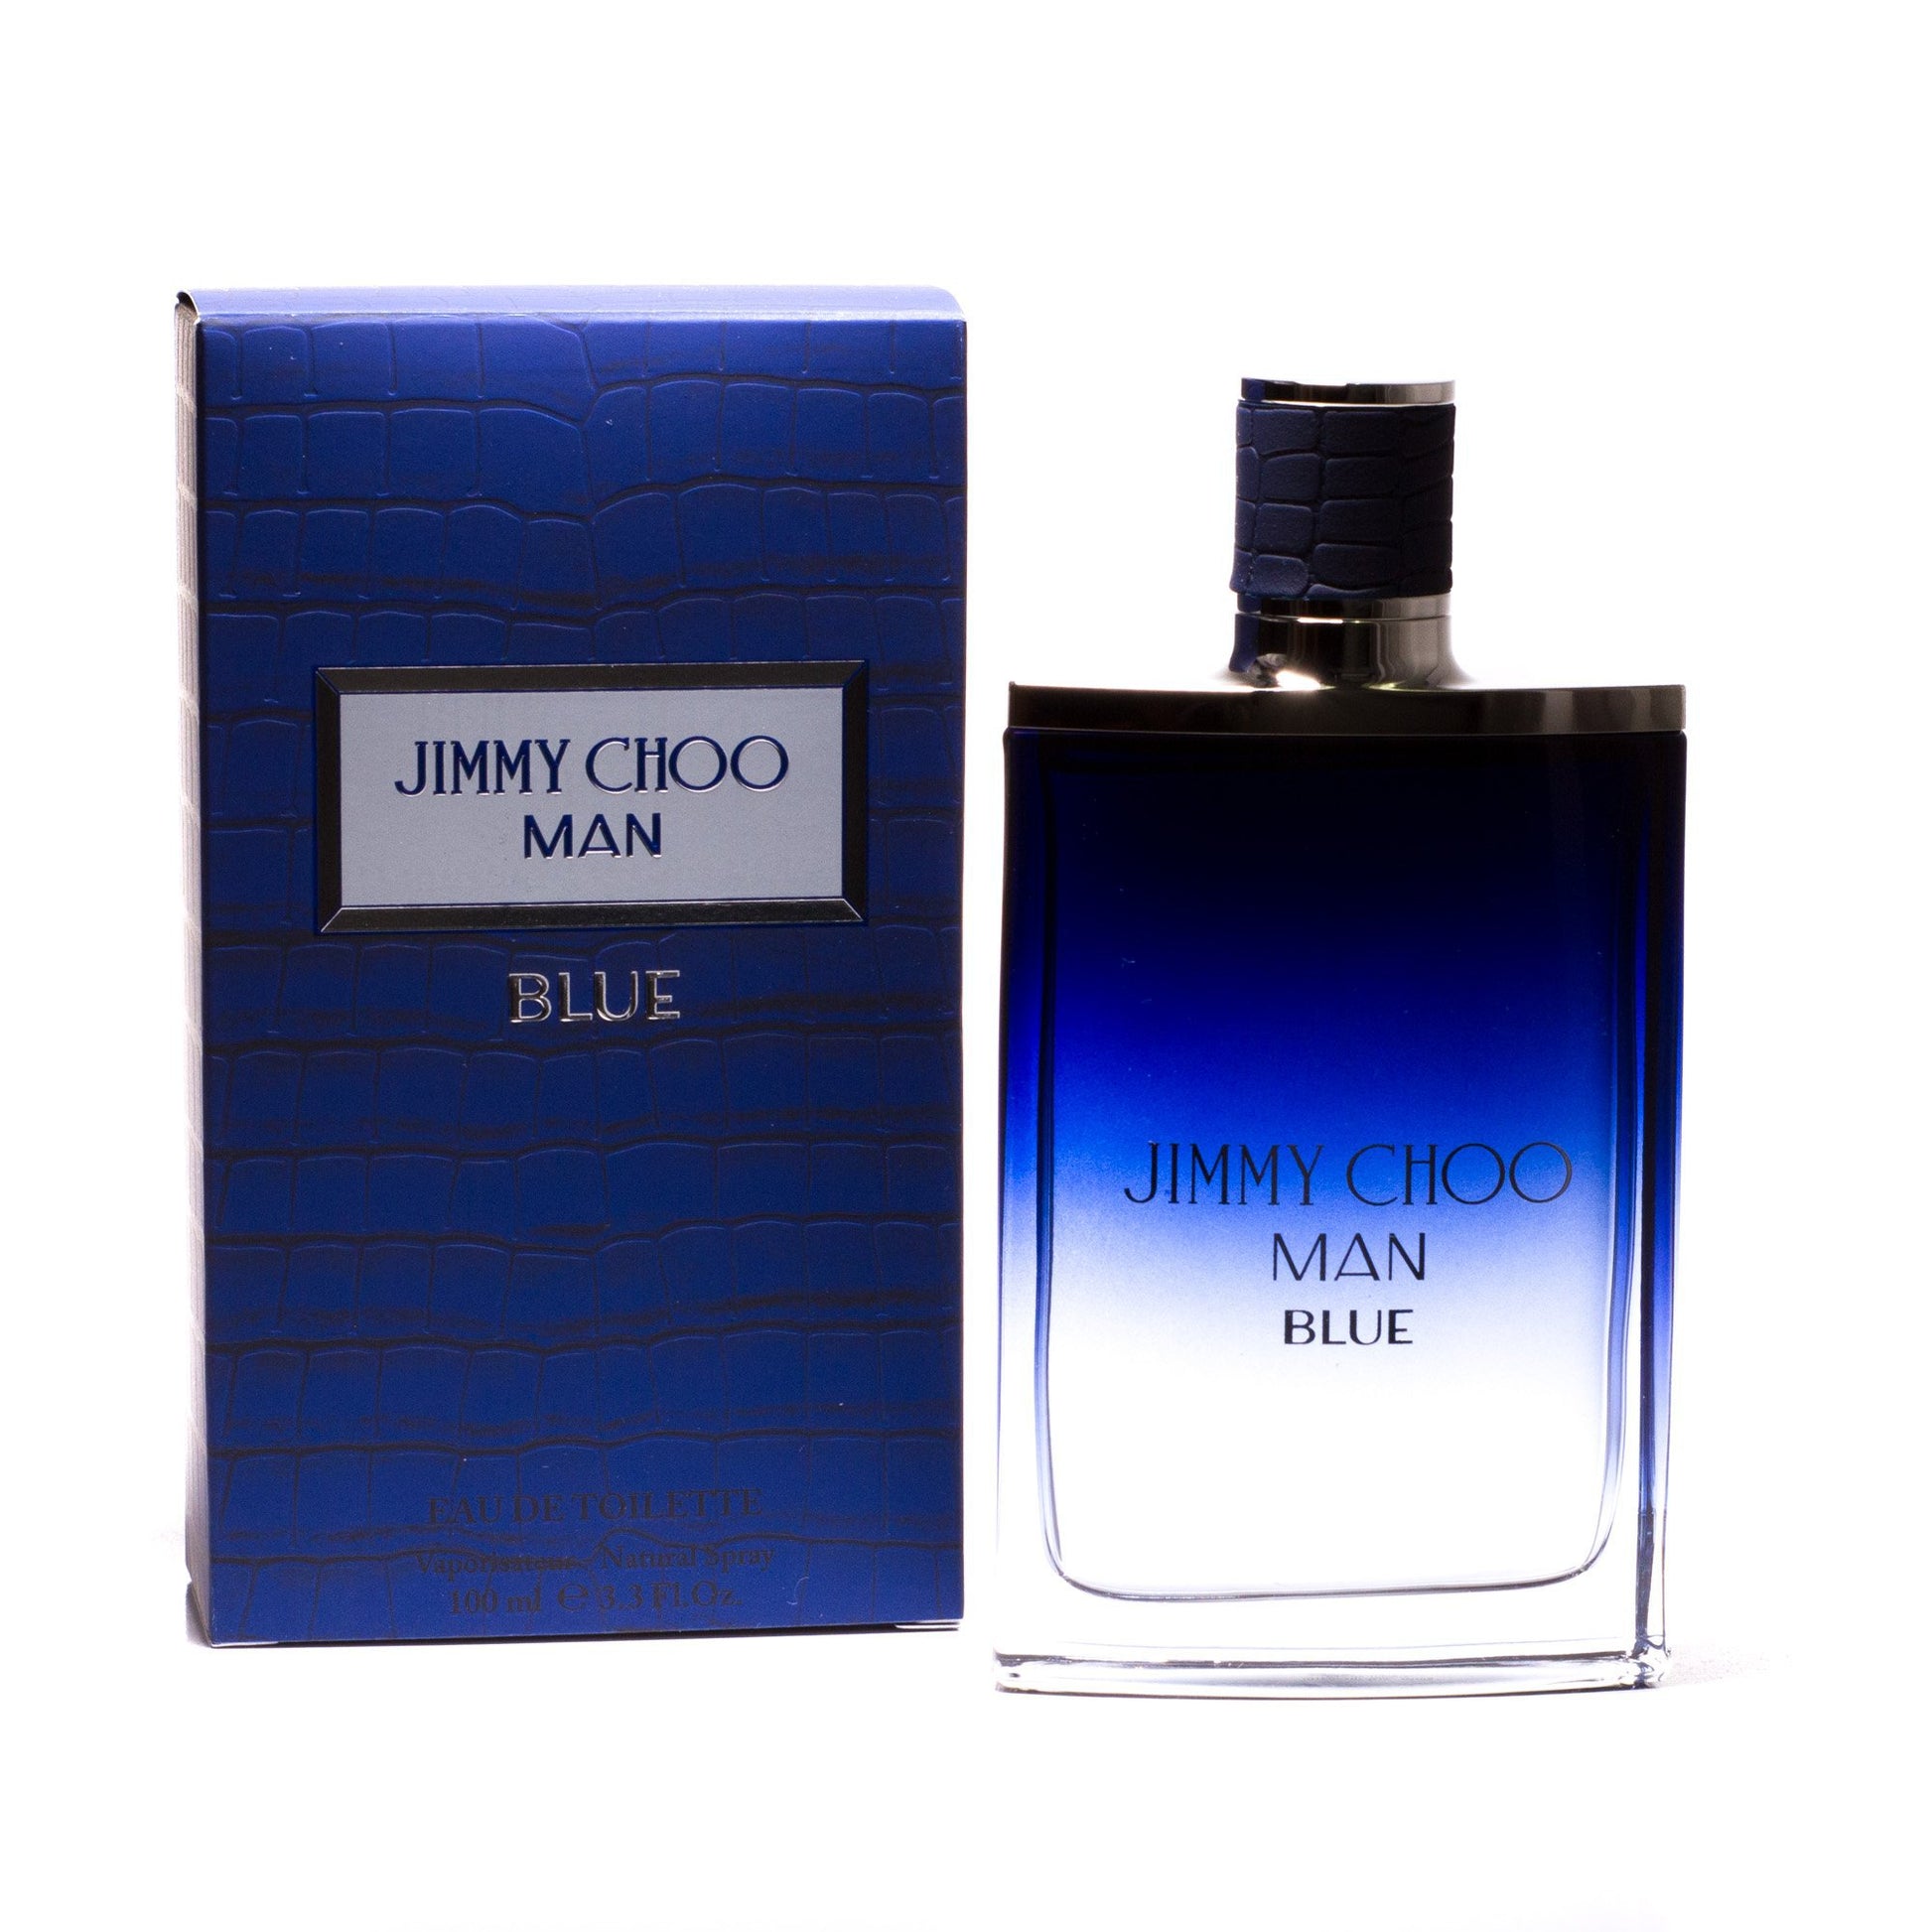 Man Blue Eau de Toilette Spray for Men by Jimmy Choo, Product image 1